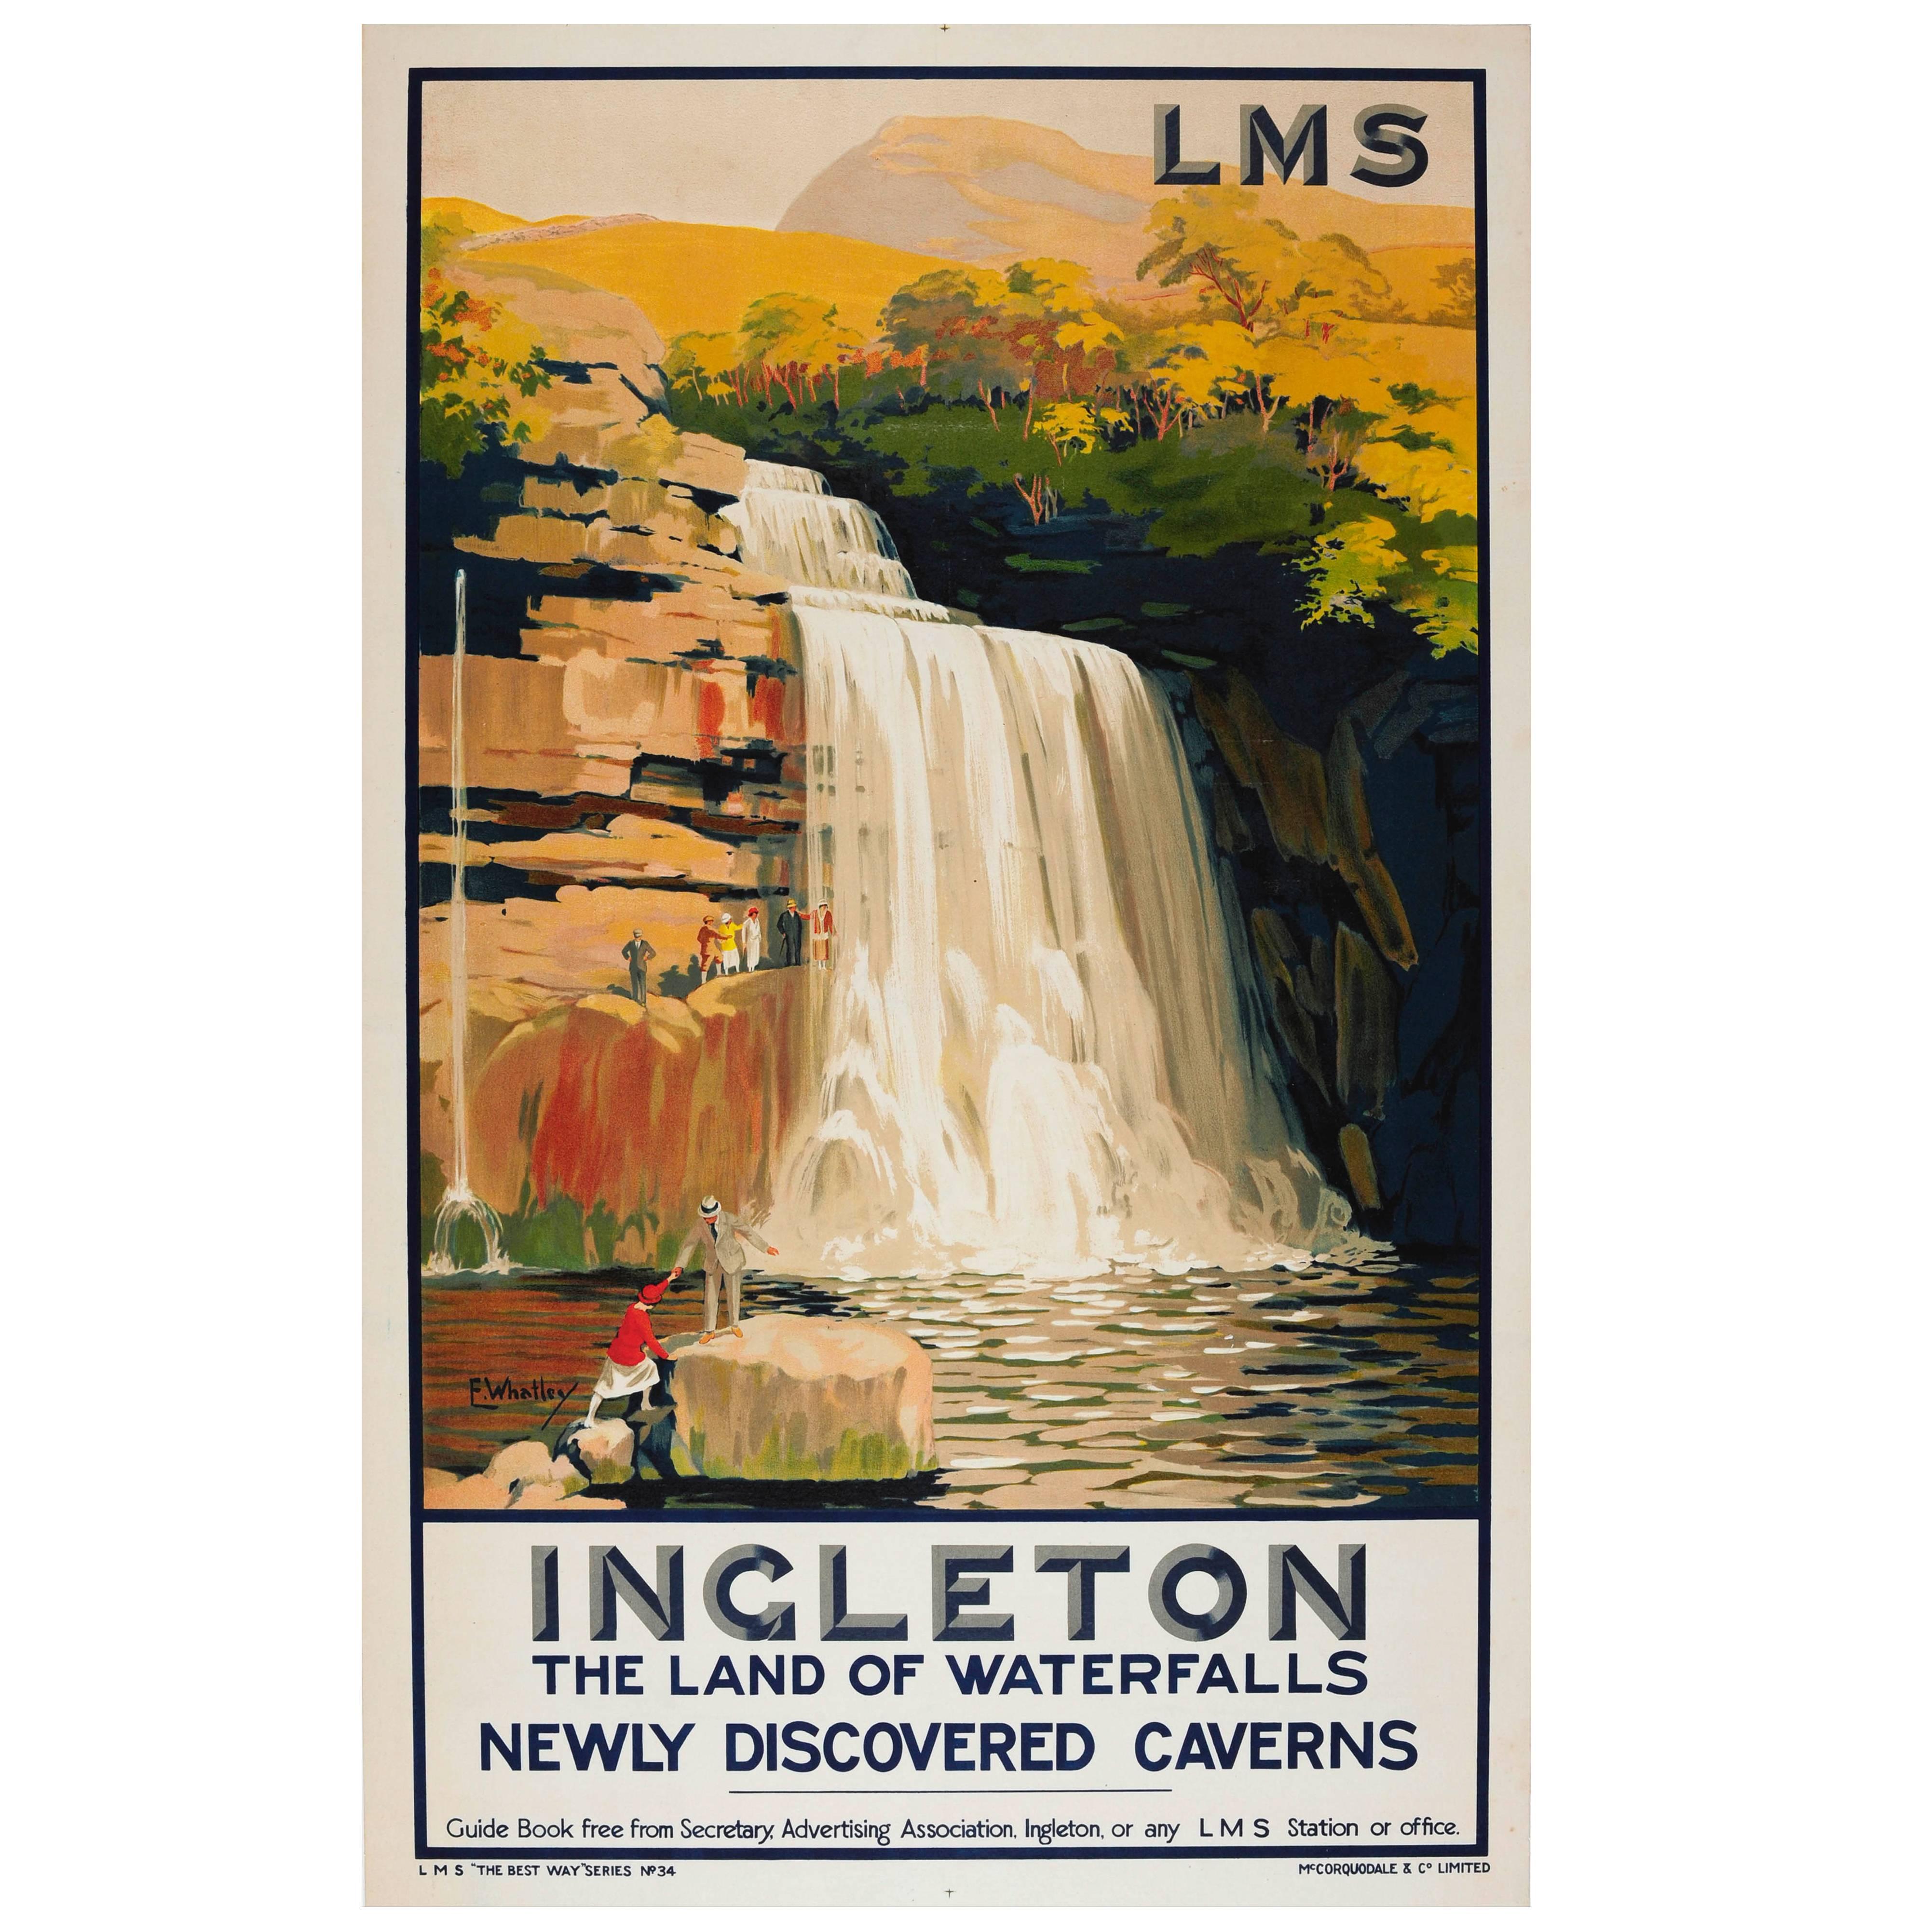 Original London Midland and Scottish Railway LMS Poster For Ingleton Waterfalls